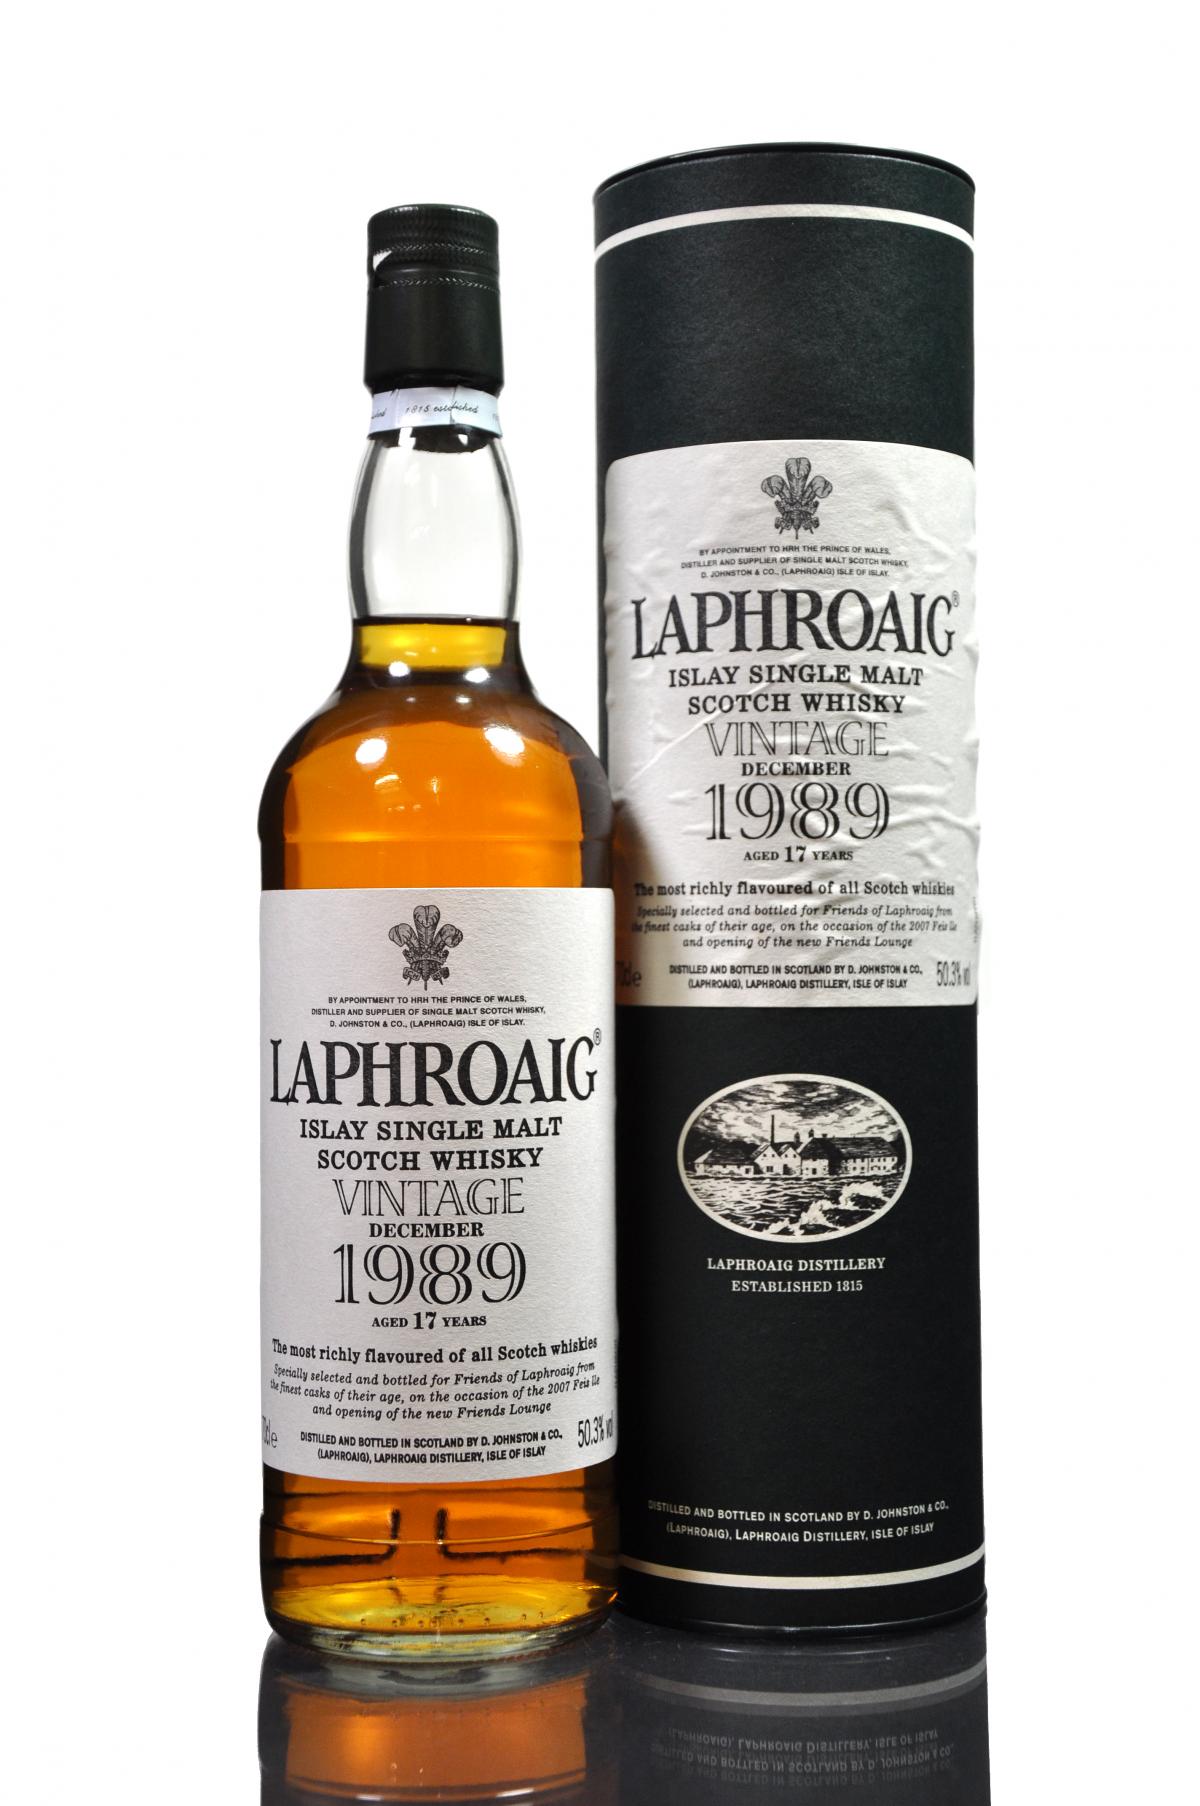 Laphroaig 1989 - 17 Year Old